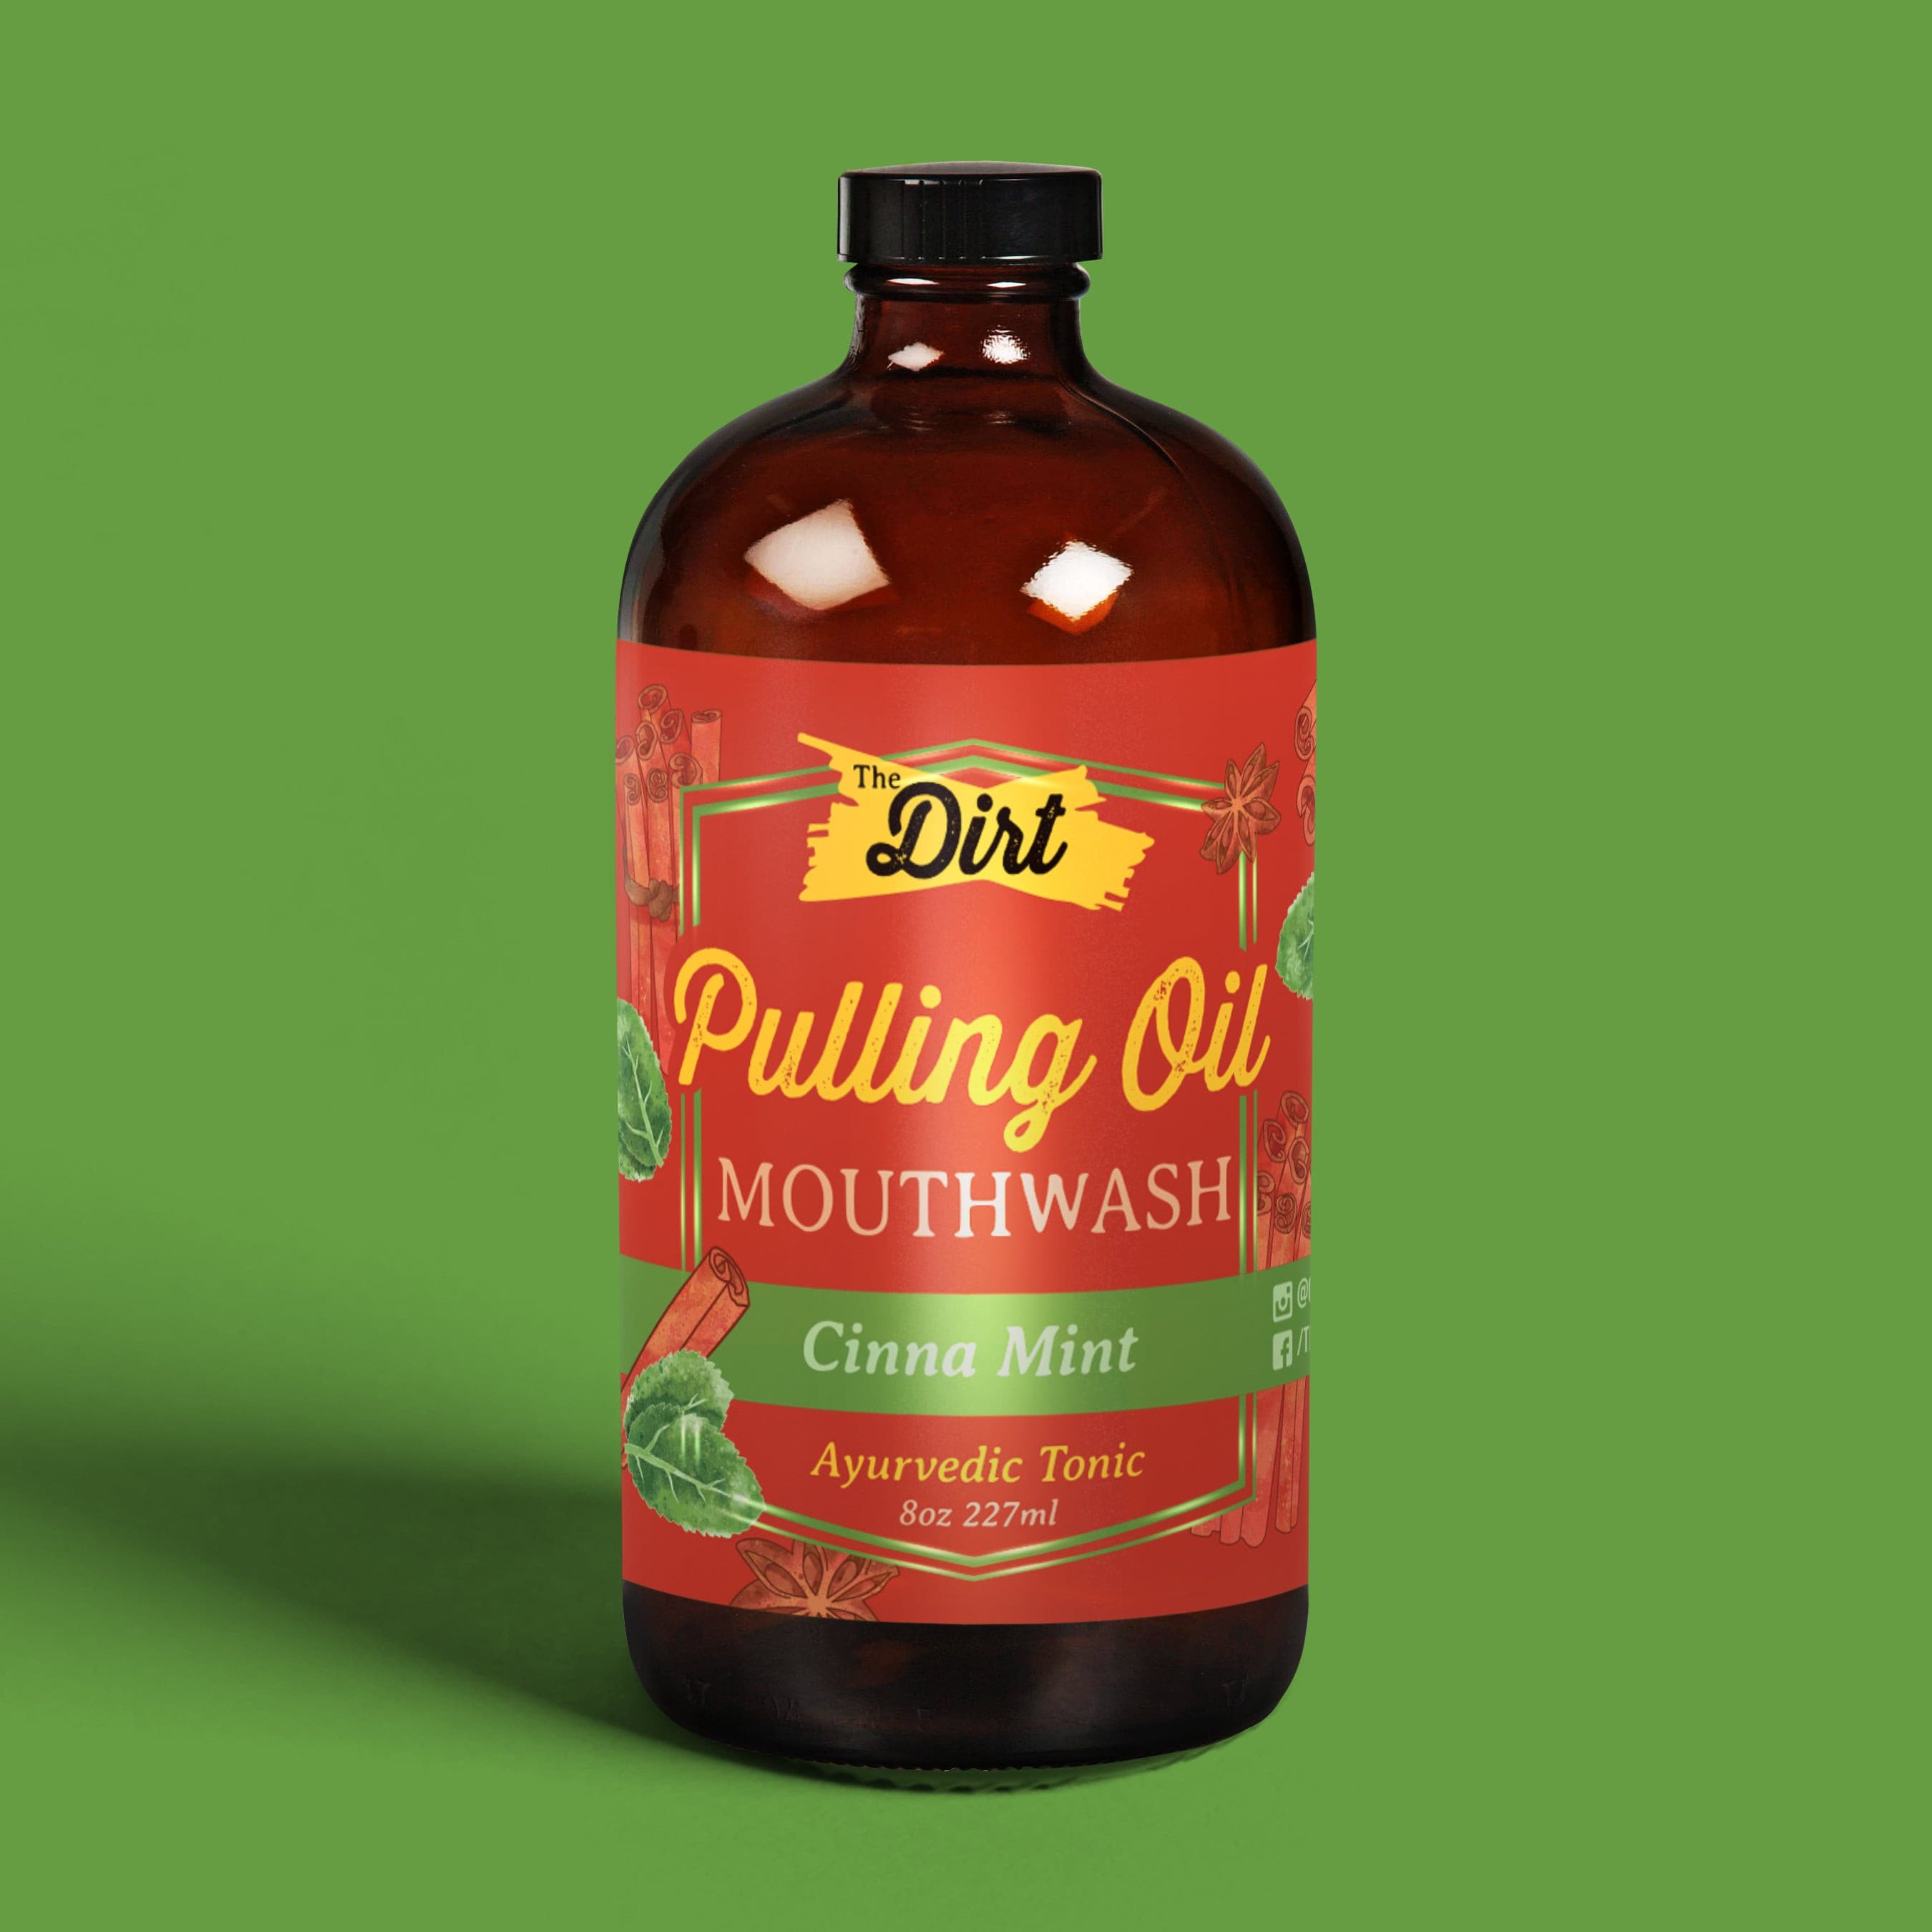 Pulling Oil Mouthwash - The Dirt - Super Natural Oral Care 8oz / Cinna-mint Oral Care